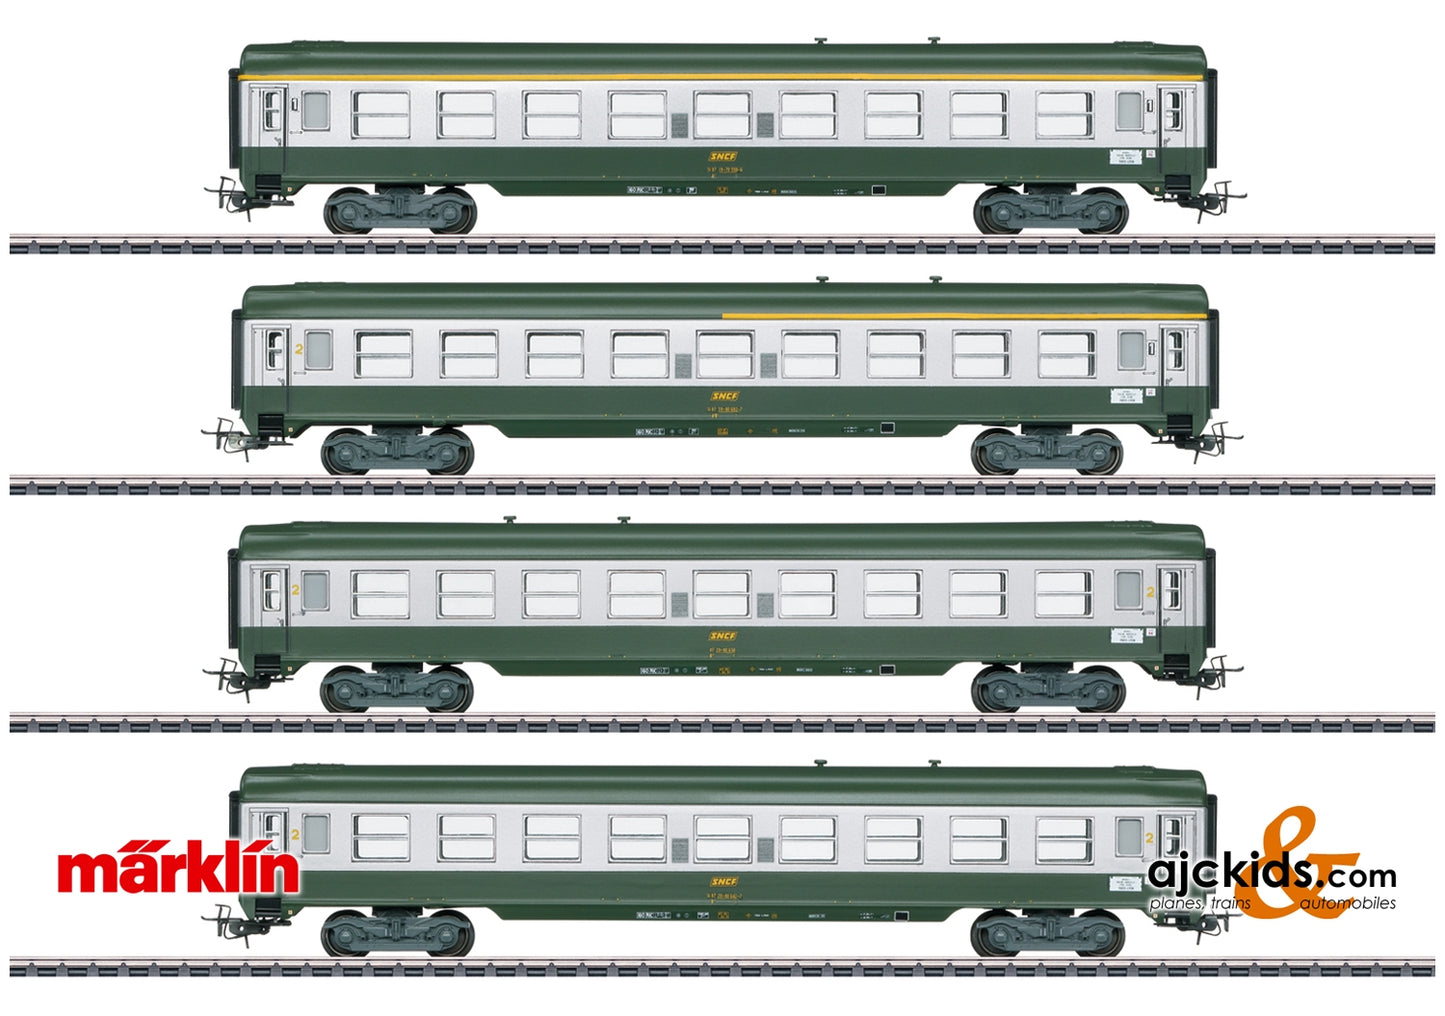 Marklin 40691 - French "Tin-Plate" Express Train Passenger Car Set